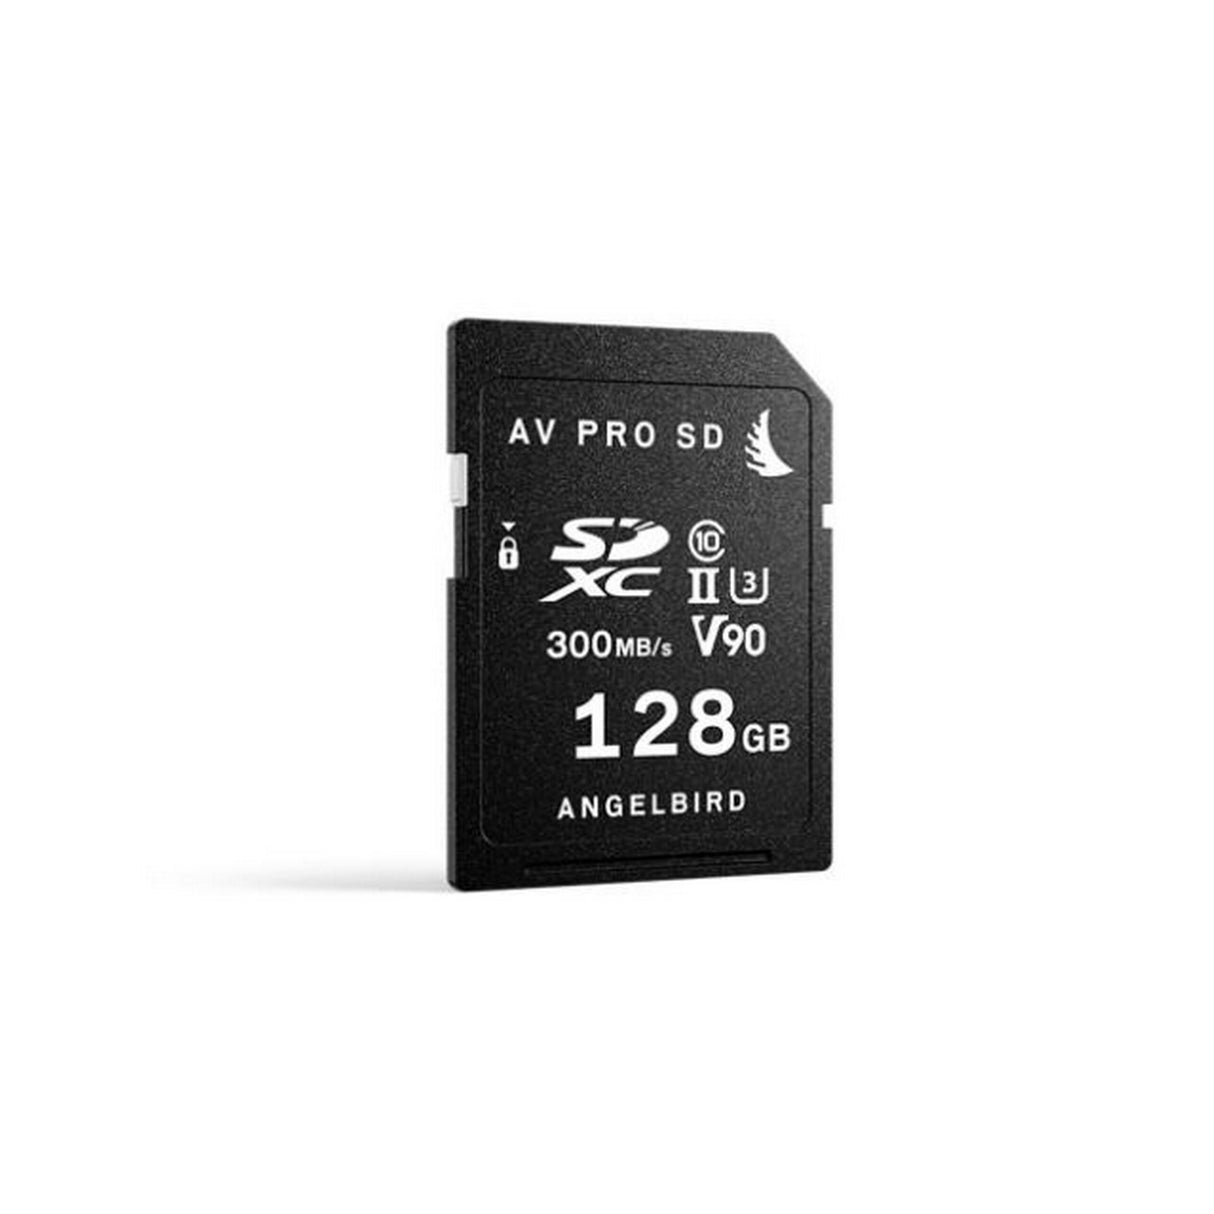 Angelbird AVpro SD MK2 128GB V90 Memory Card